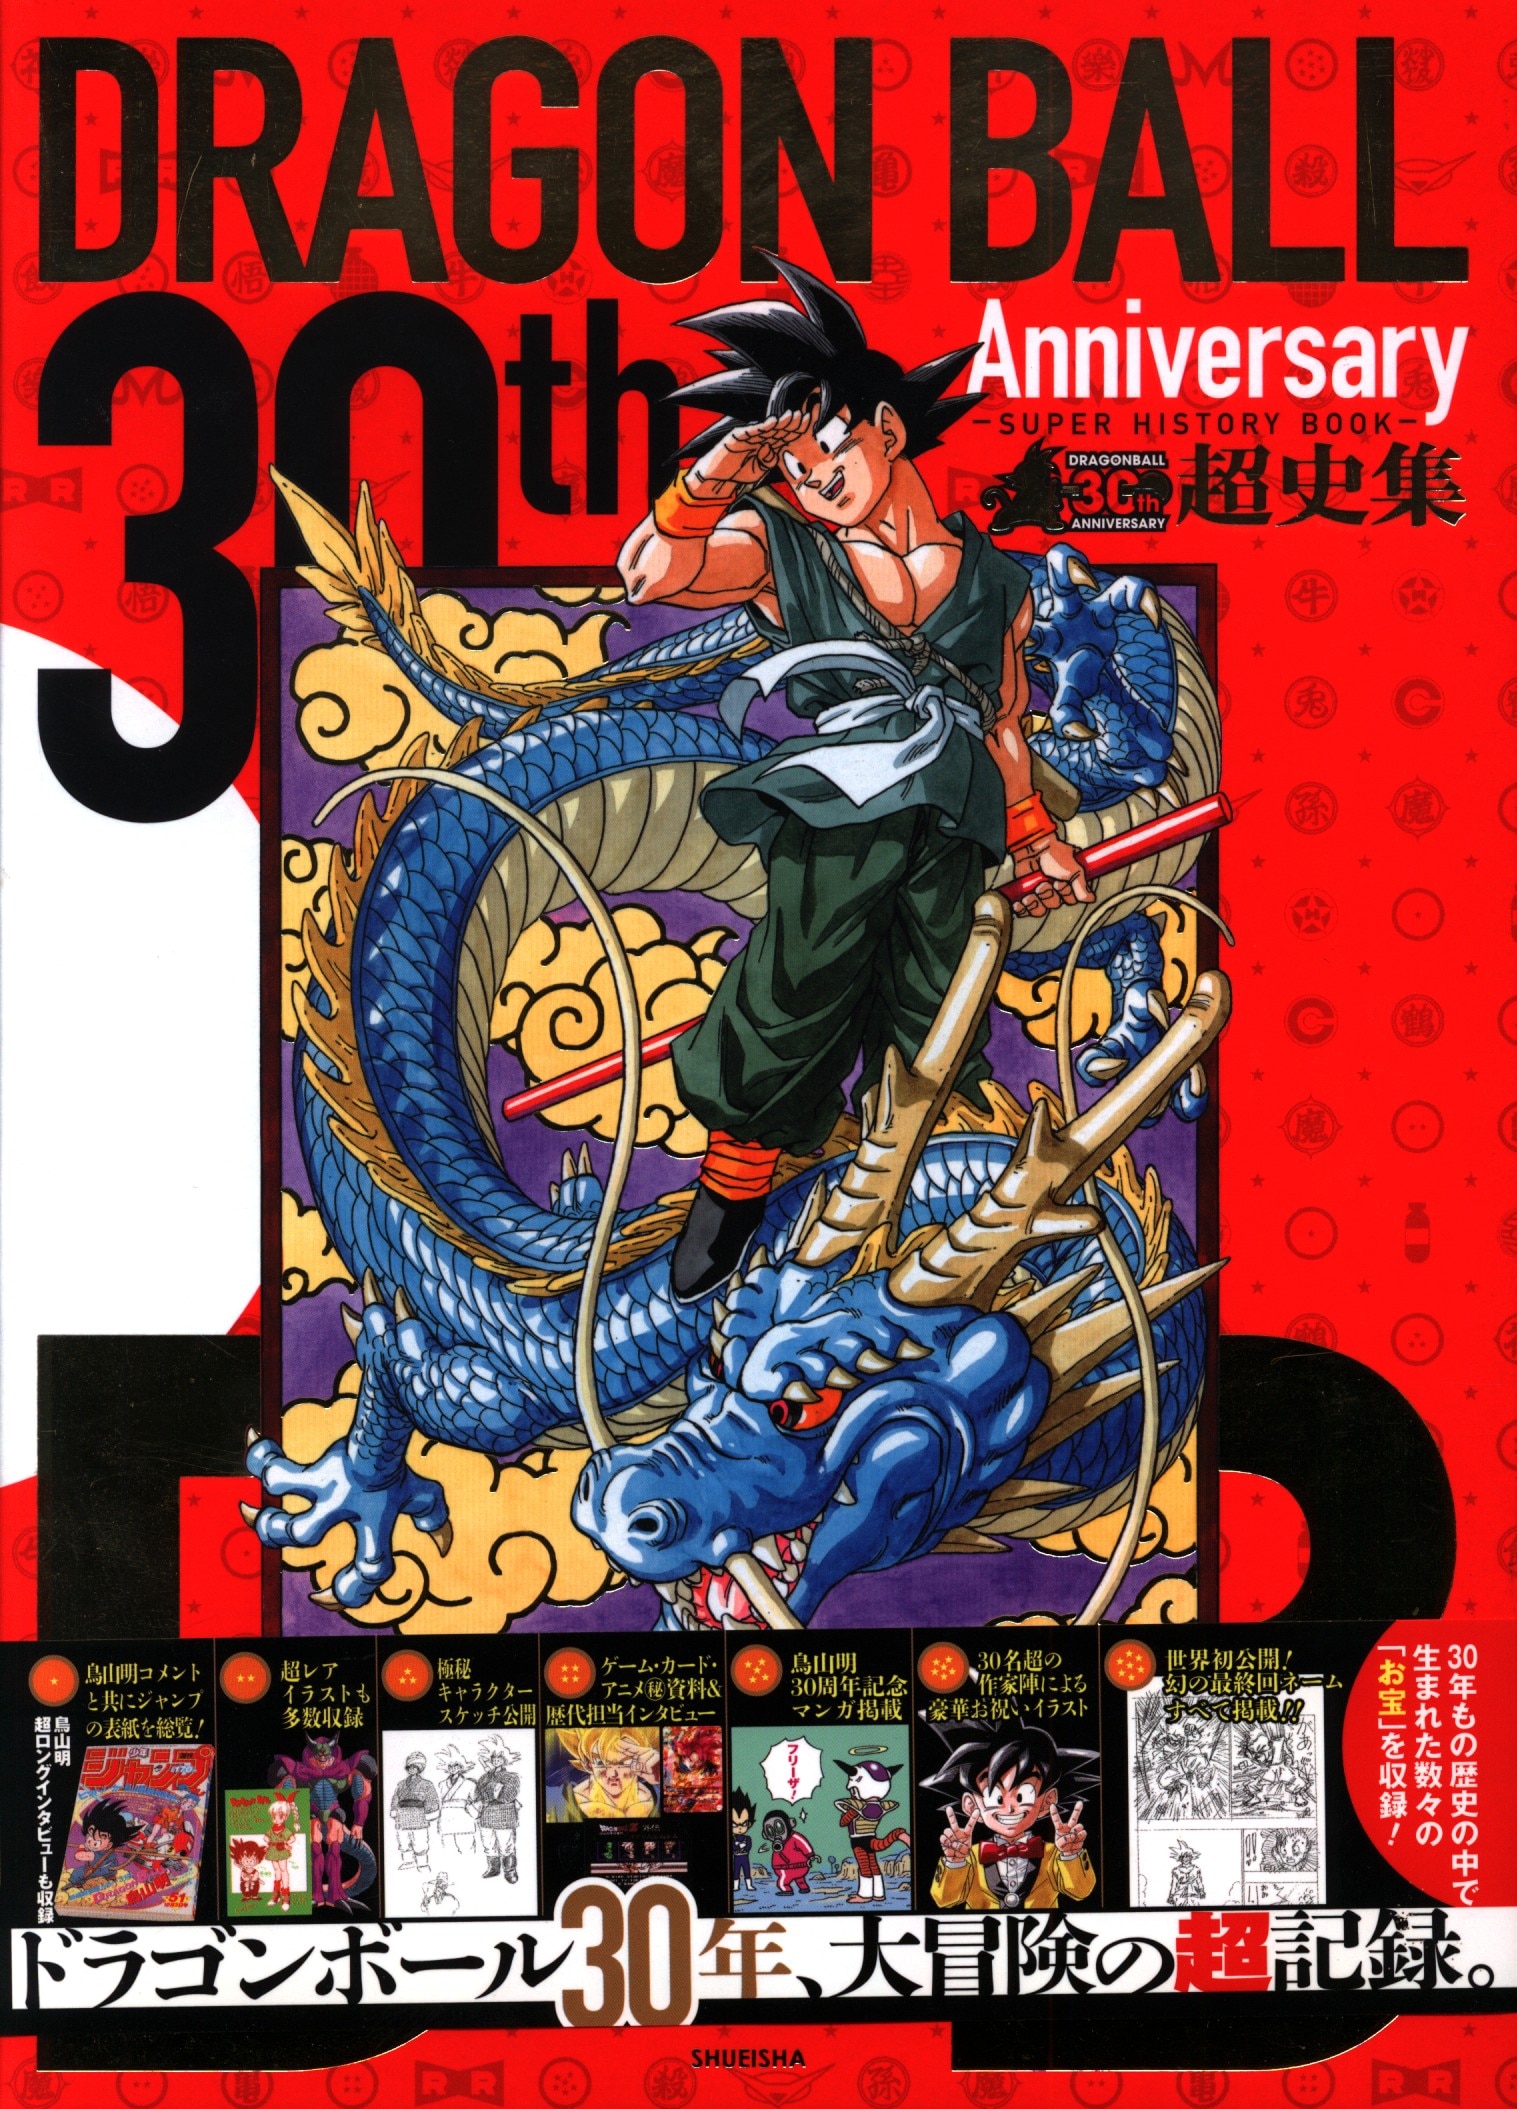 Shueisha Favorite Book Comics V Jump Editorial Department 30th Anniversary Dragon Ball Super History Collection History Book Super Obi With Box Mandarake Online Shop